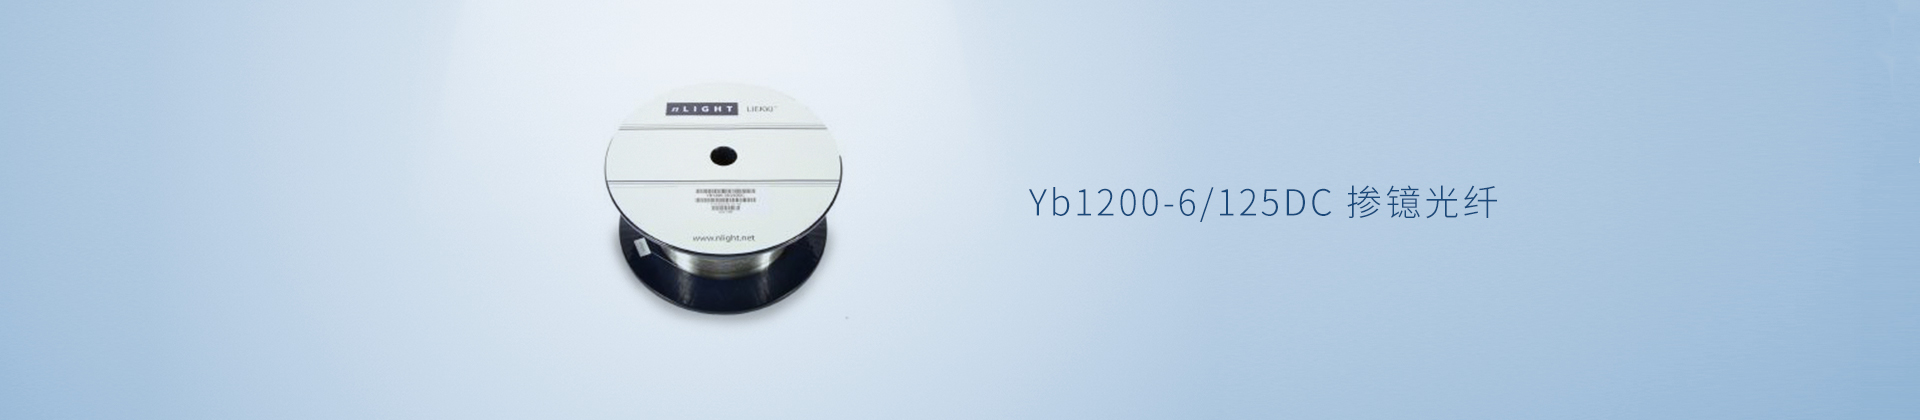 Yb1200-6/125DC 掺镱光纤